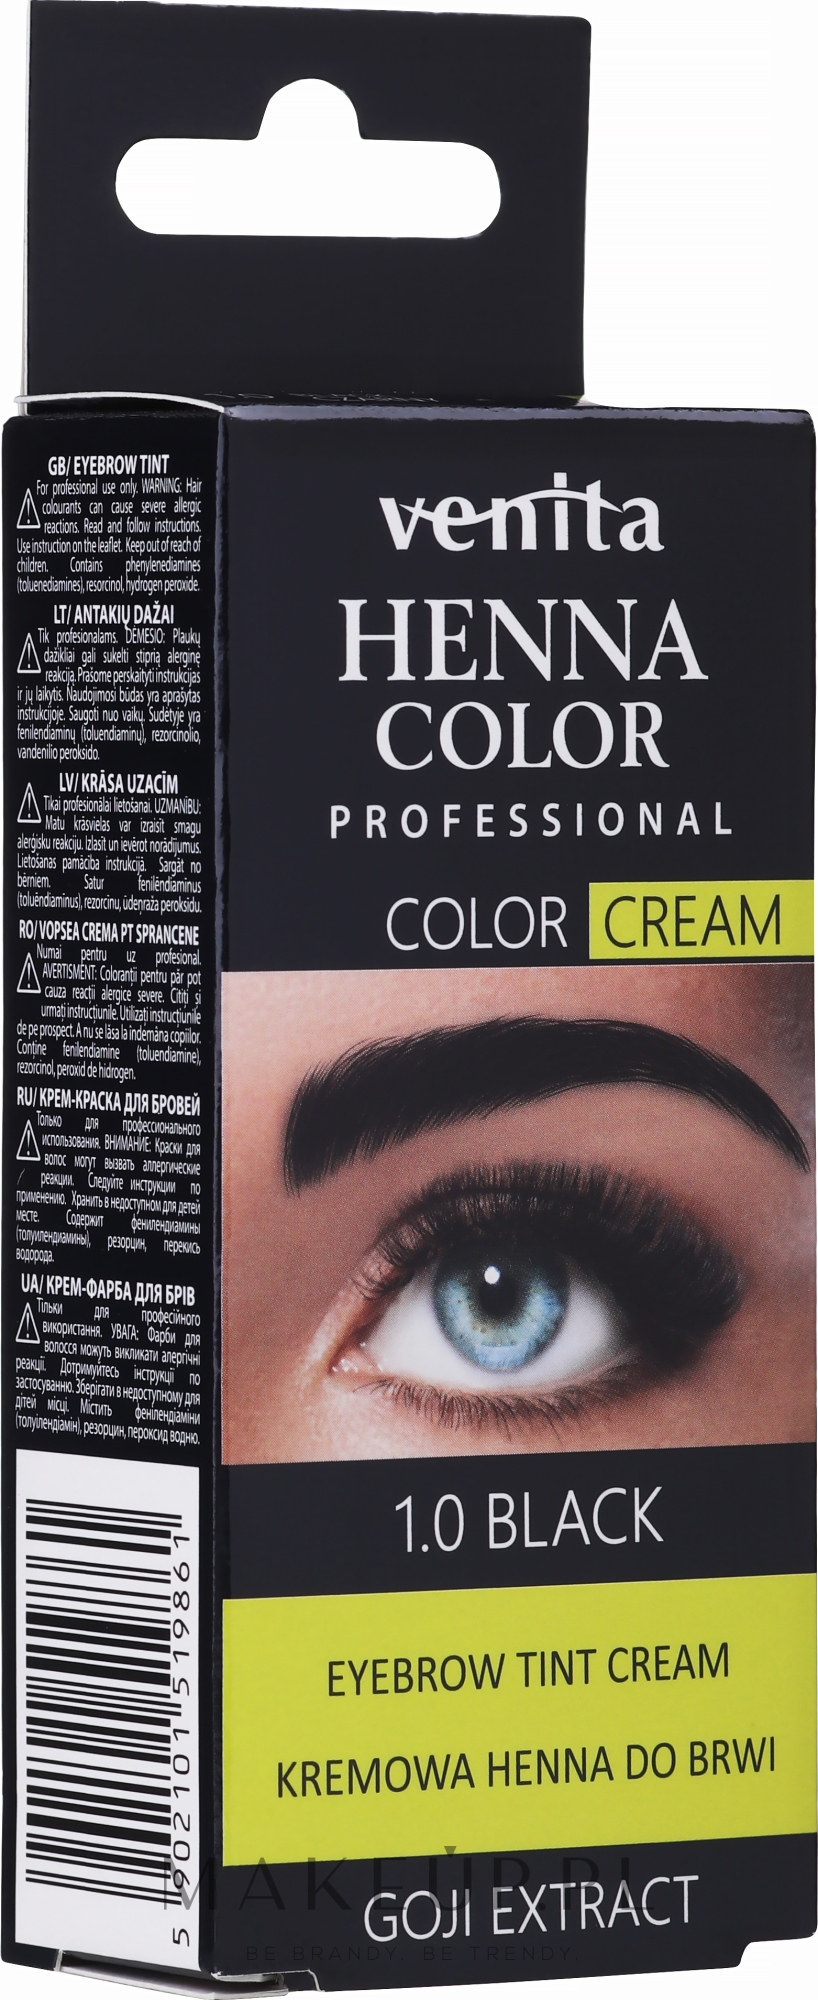 Kremowa henna do brwi - Venita Professional Henna Color Cream Eyebrow Tint Cream — Zdjęcie 1.0 - Black